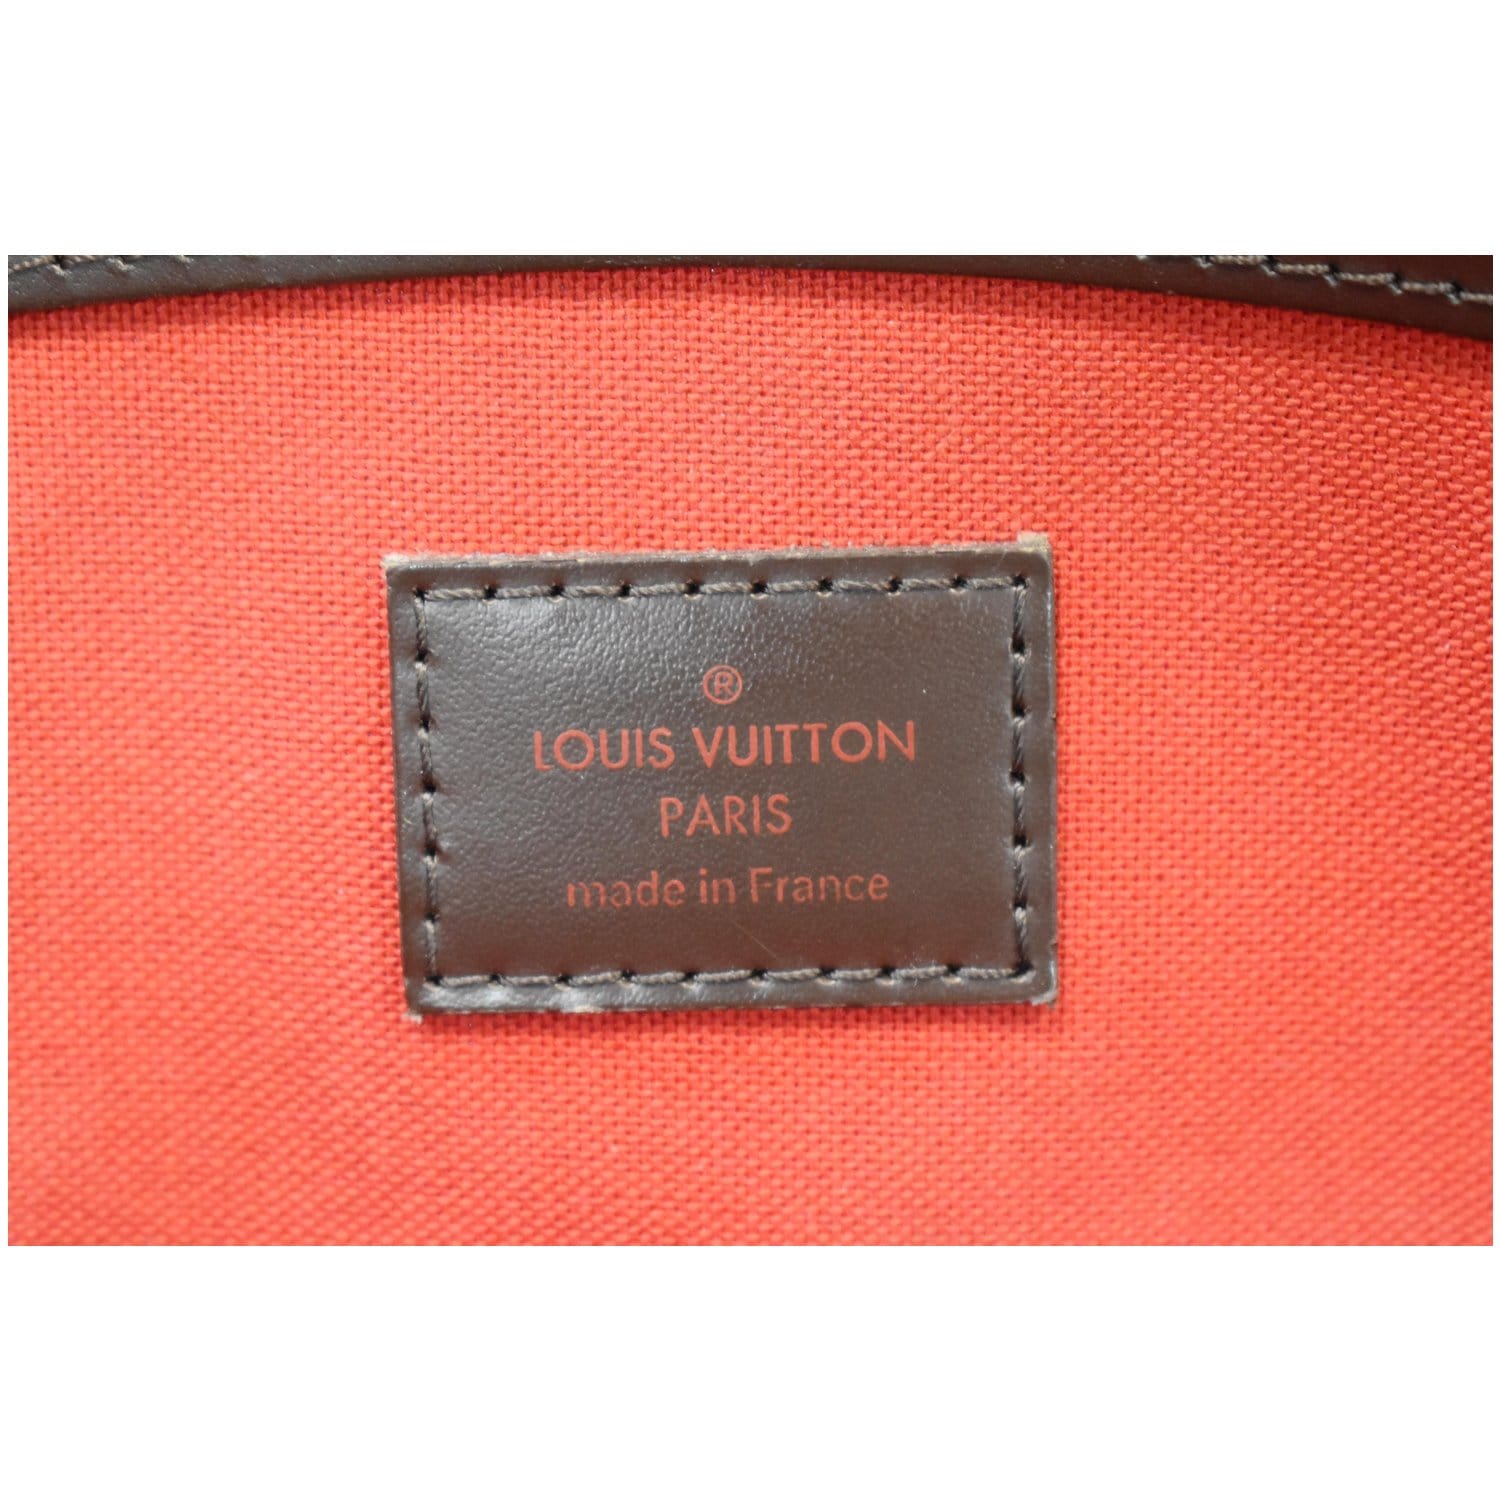 used Pre-owned Louis Vuitton Tote Bag Verona mm Brown Gold Damier Ebene N41118 Du3170 Louis Vuitton Handbag Women's LV (Good), Adult Unisex, Size: (